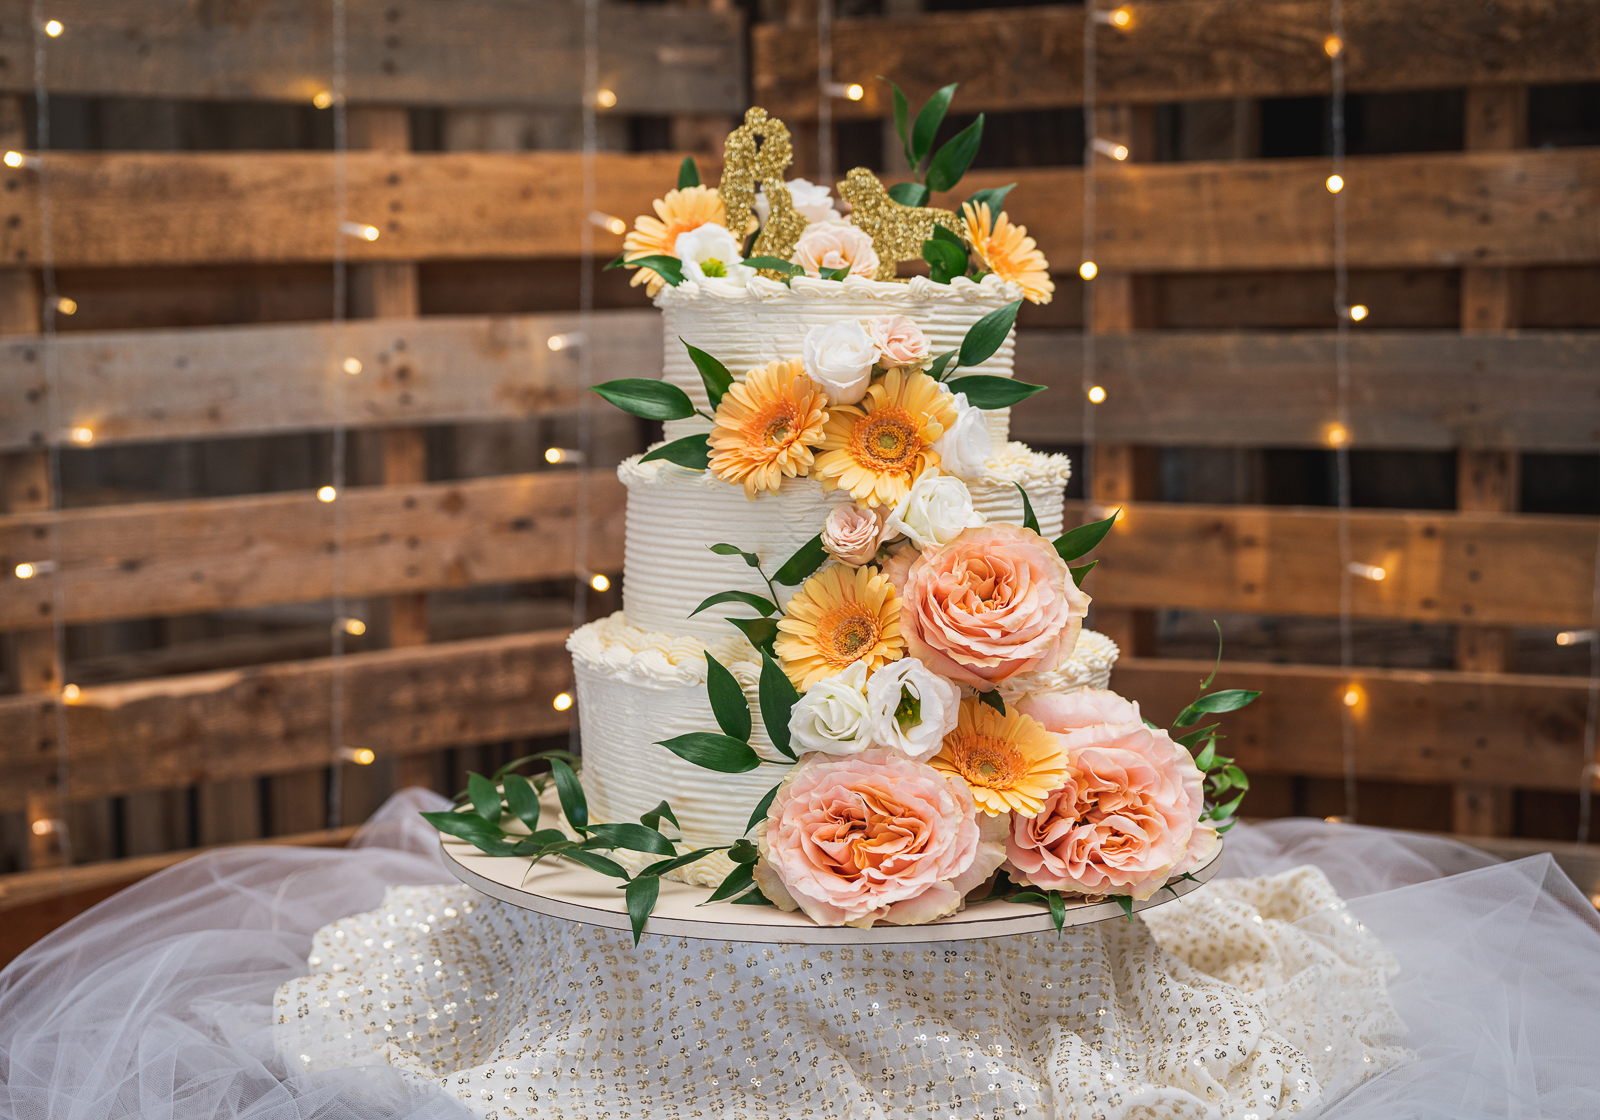 Wedding cake, flowers, cute wedding cake topper, cute cake topper, gold, glitter, string lights, wood panels, pallets, fall wedding, rustic wedding reception at White Birch Barn